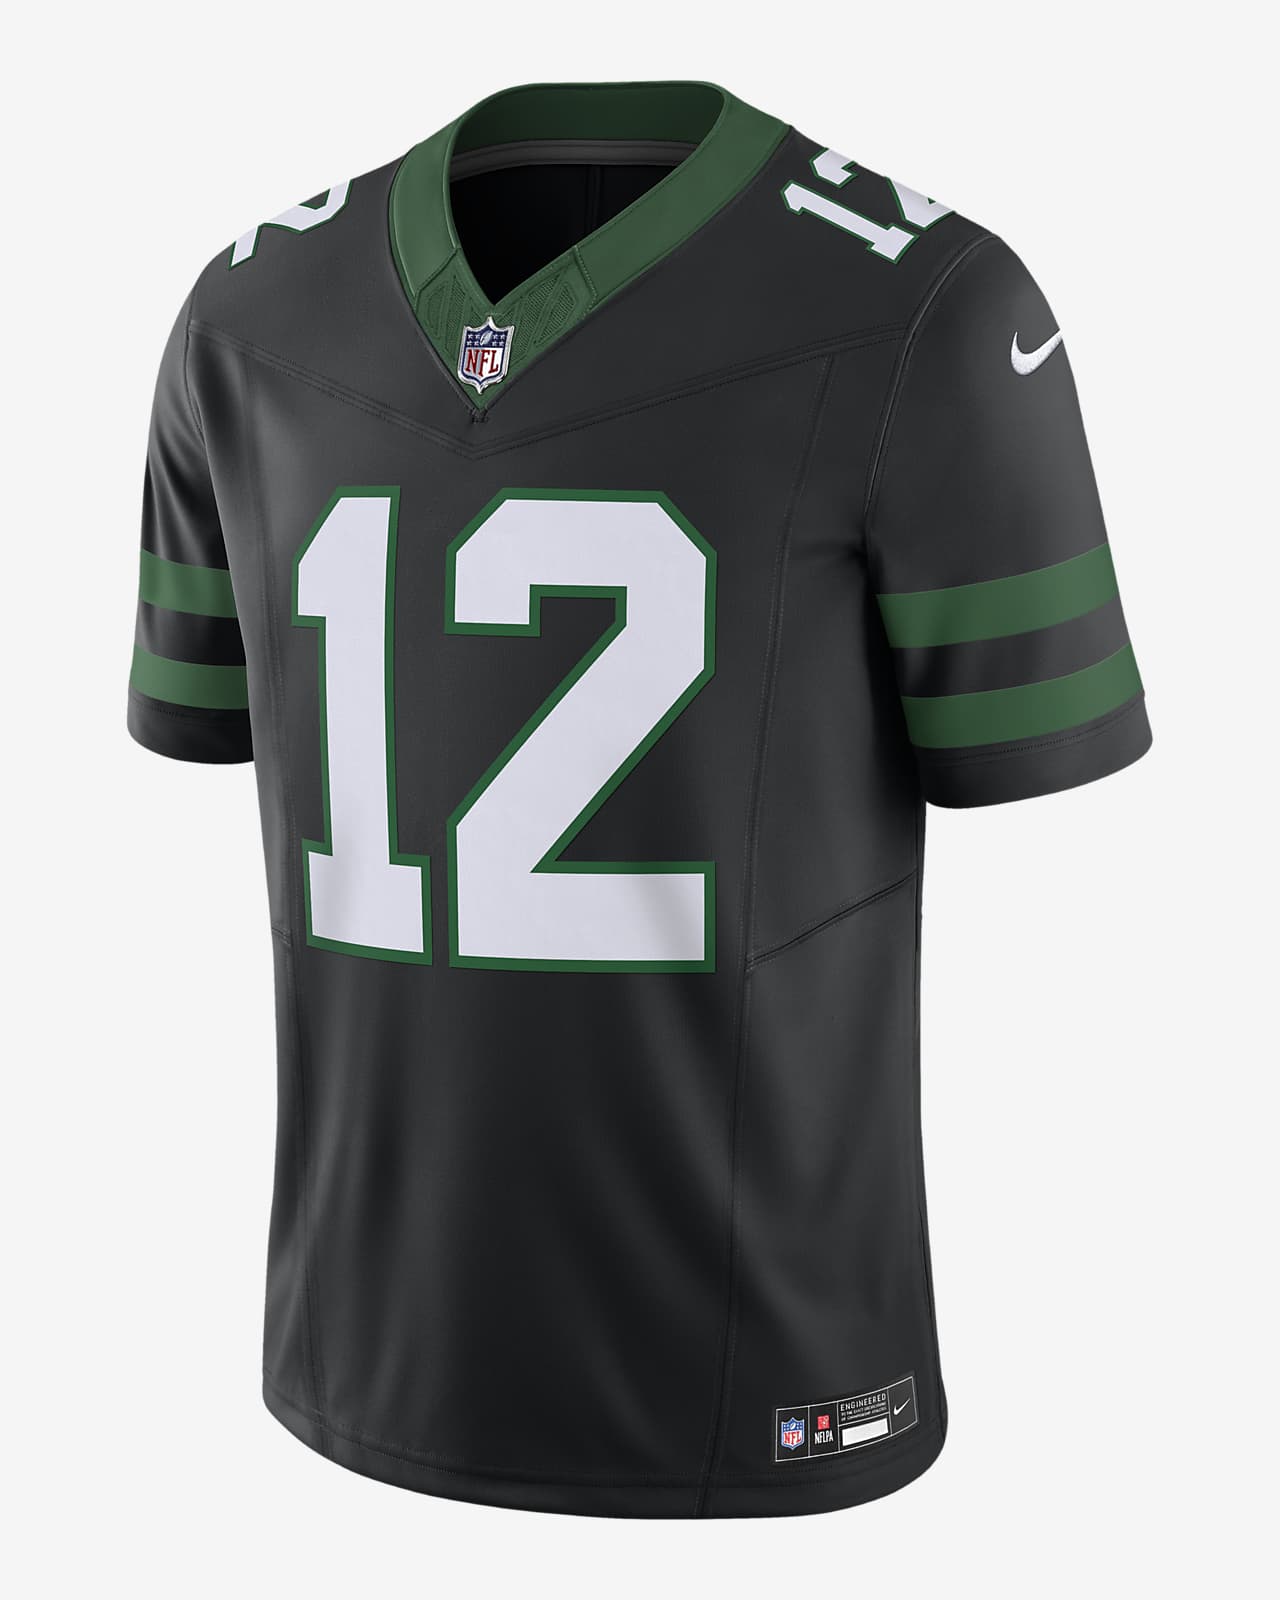 Jersey de fútbol americano Nike Dri-FIT de la NFL Limited para hombre Joe Namath New York Jets